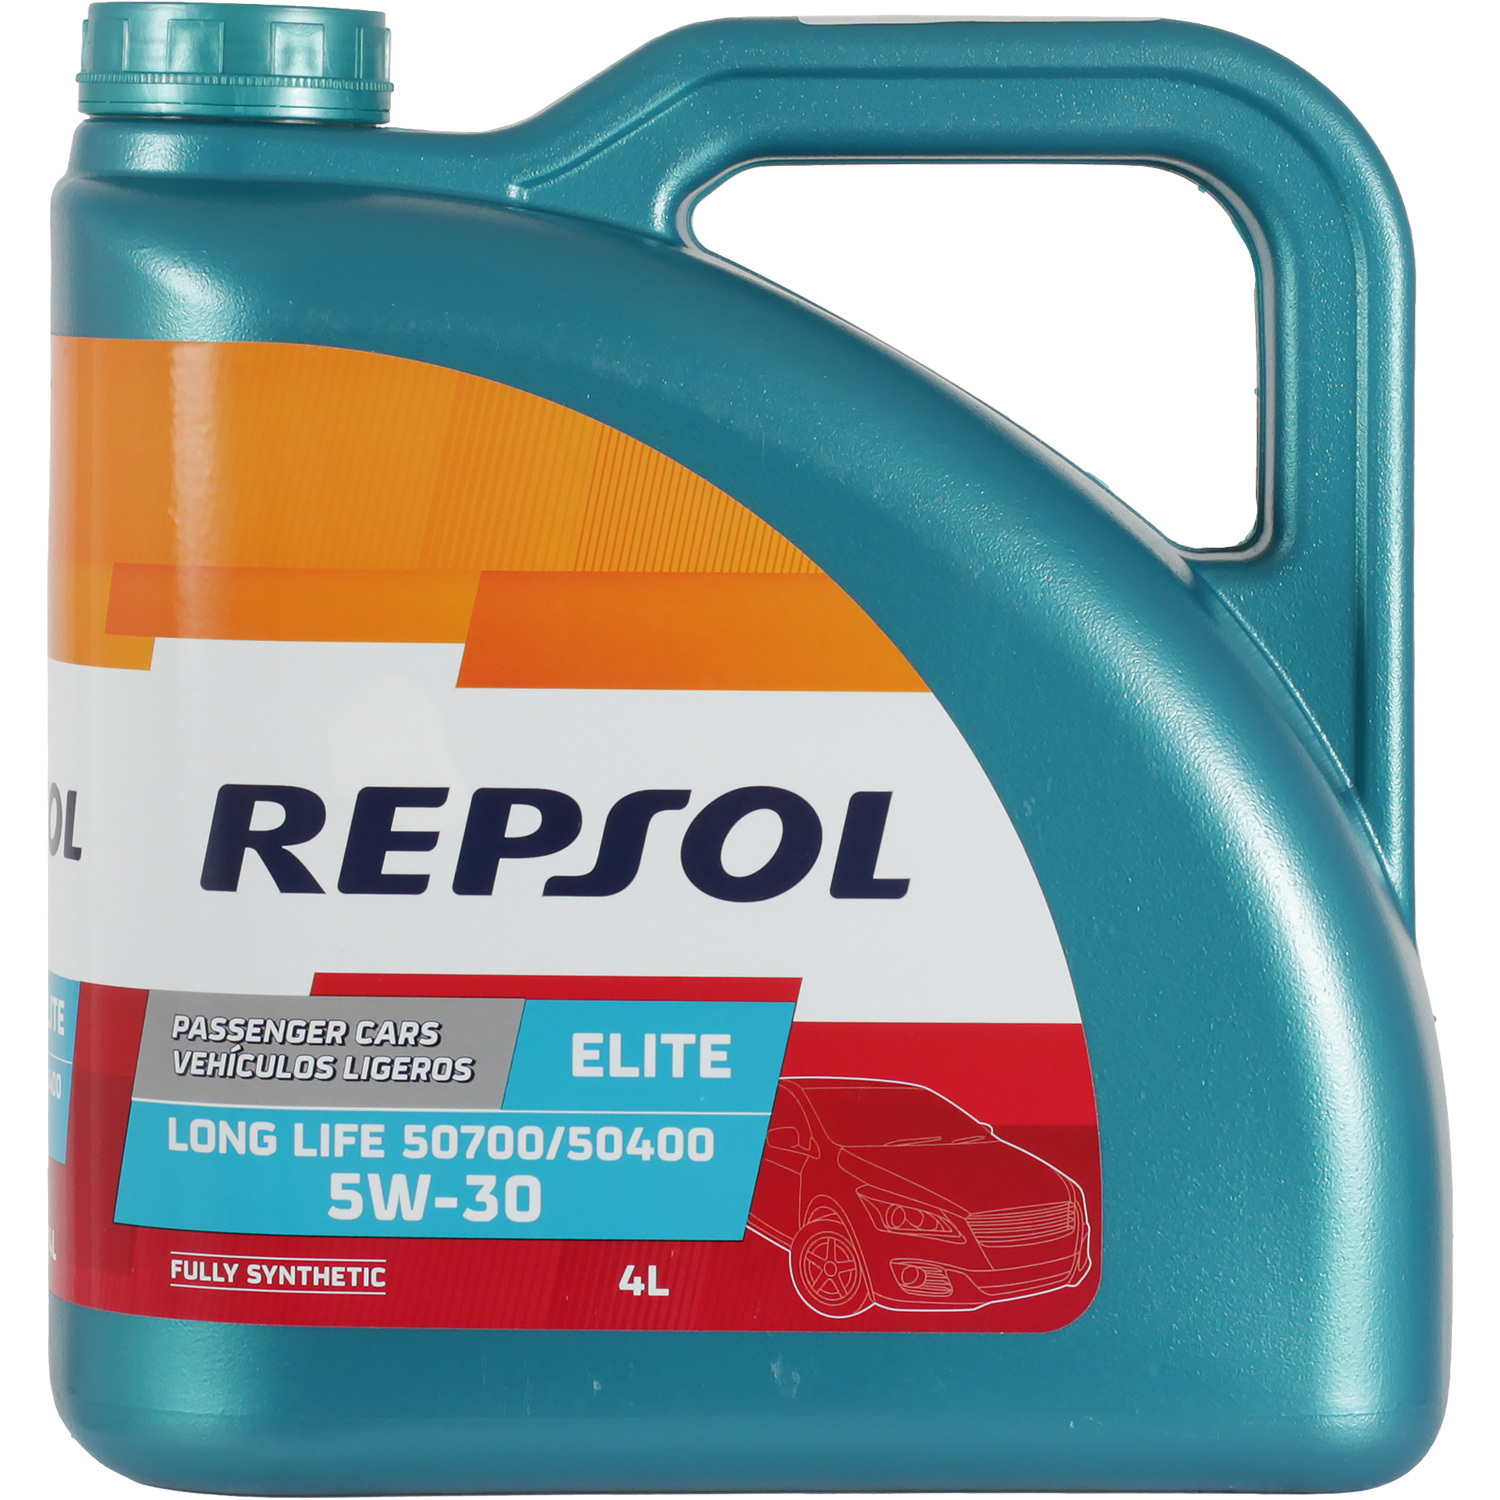 Repsol Масло моторное Repsol ELITE LONG LIFE 50700/50400 5W-30 4л repsol масло моторное repsol elite evolution long life 5w 30 1л